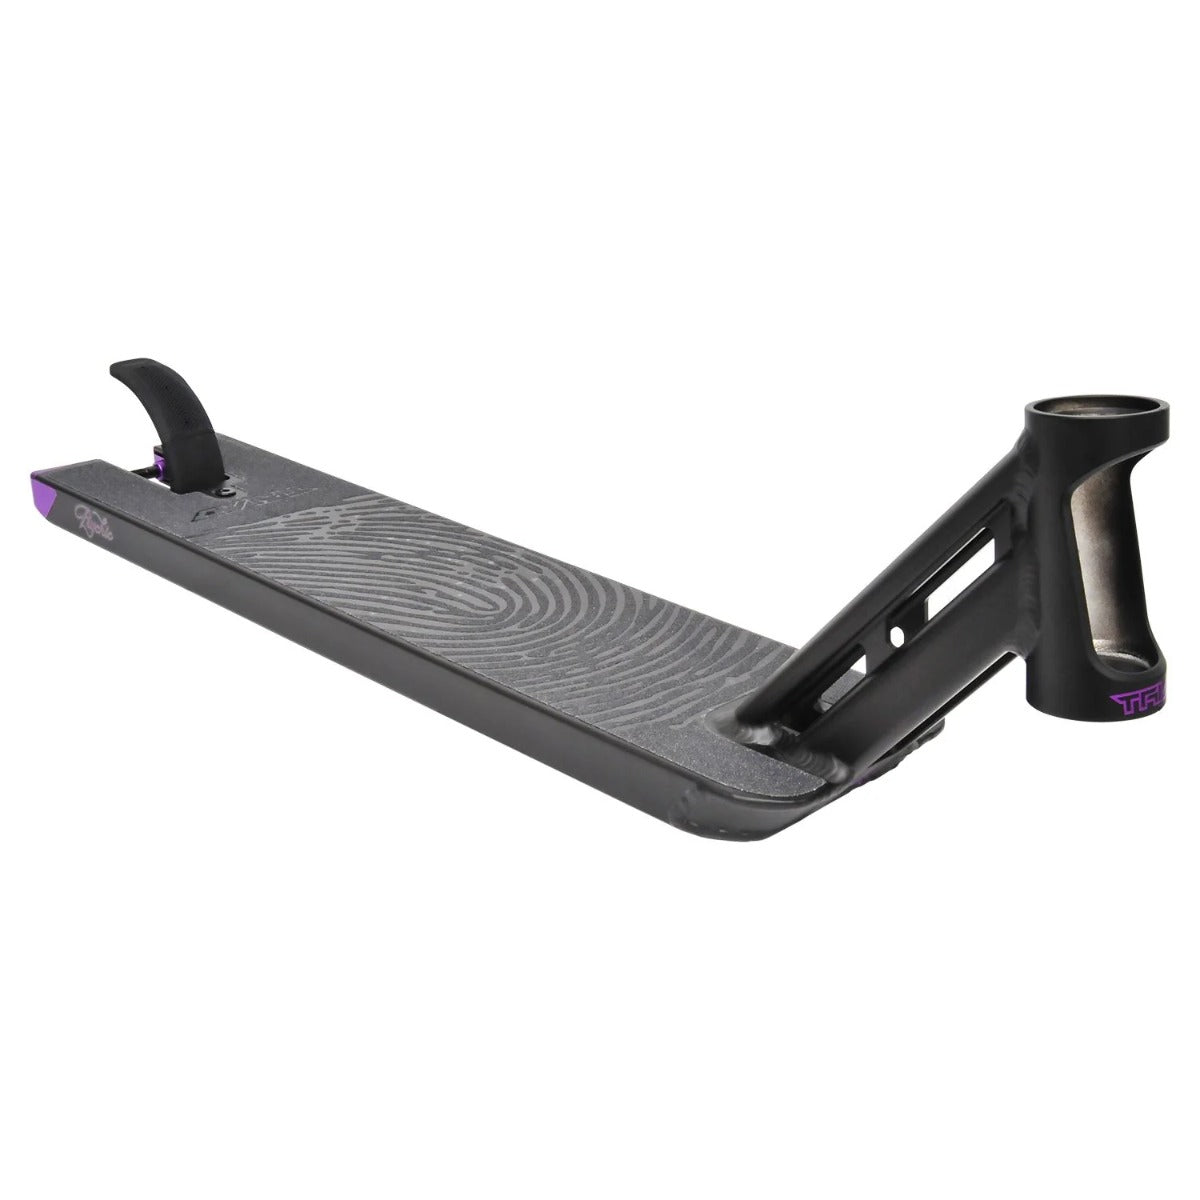 Triad Psychic Black / Purple Stunt Scooter Deck - 5.1" x 22" - Deck